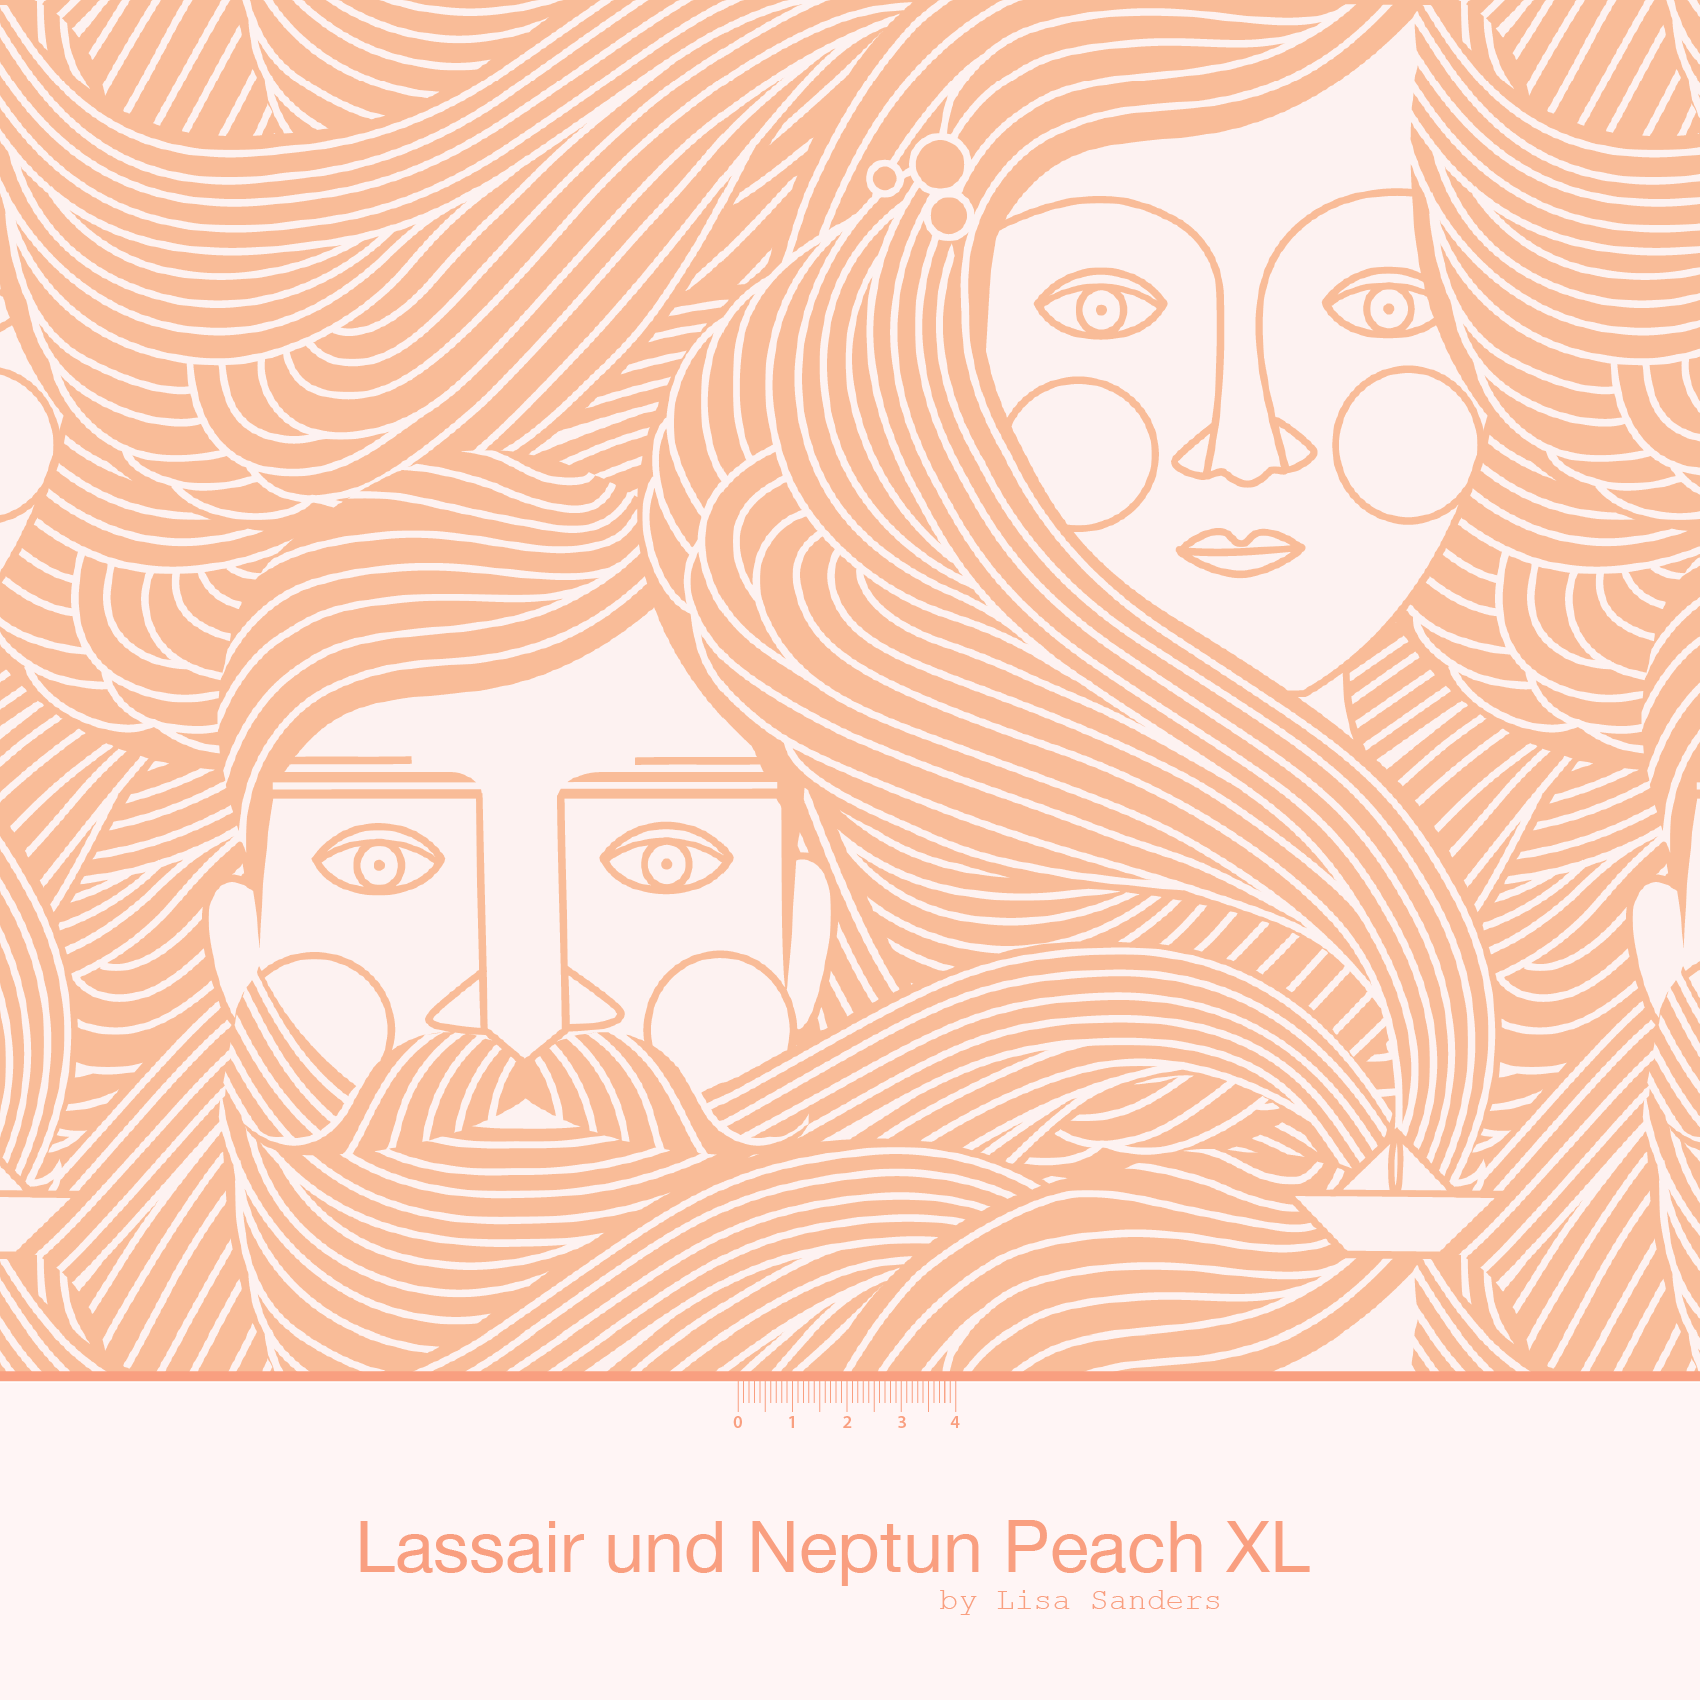 Lassair und Neptun Peach XL